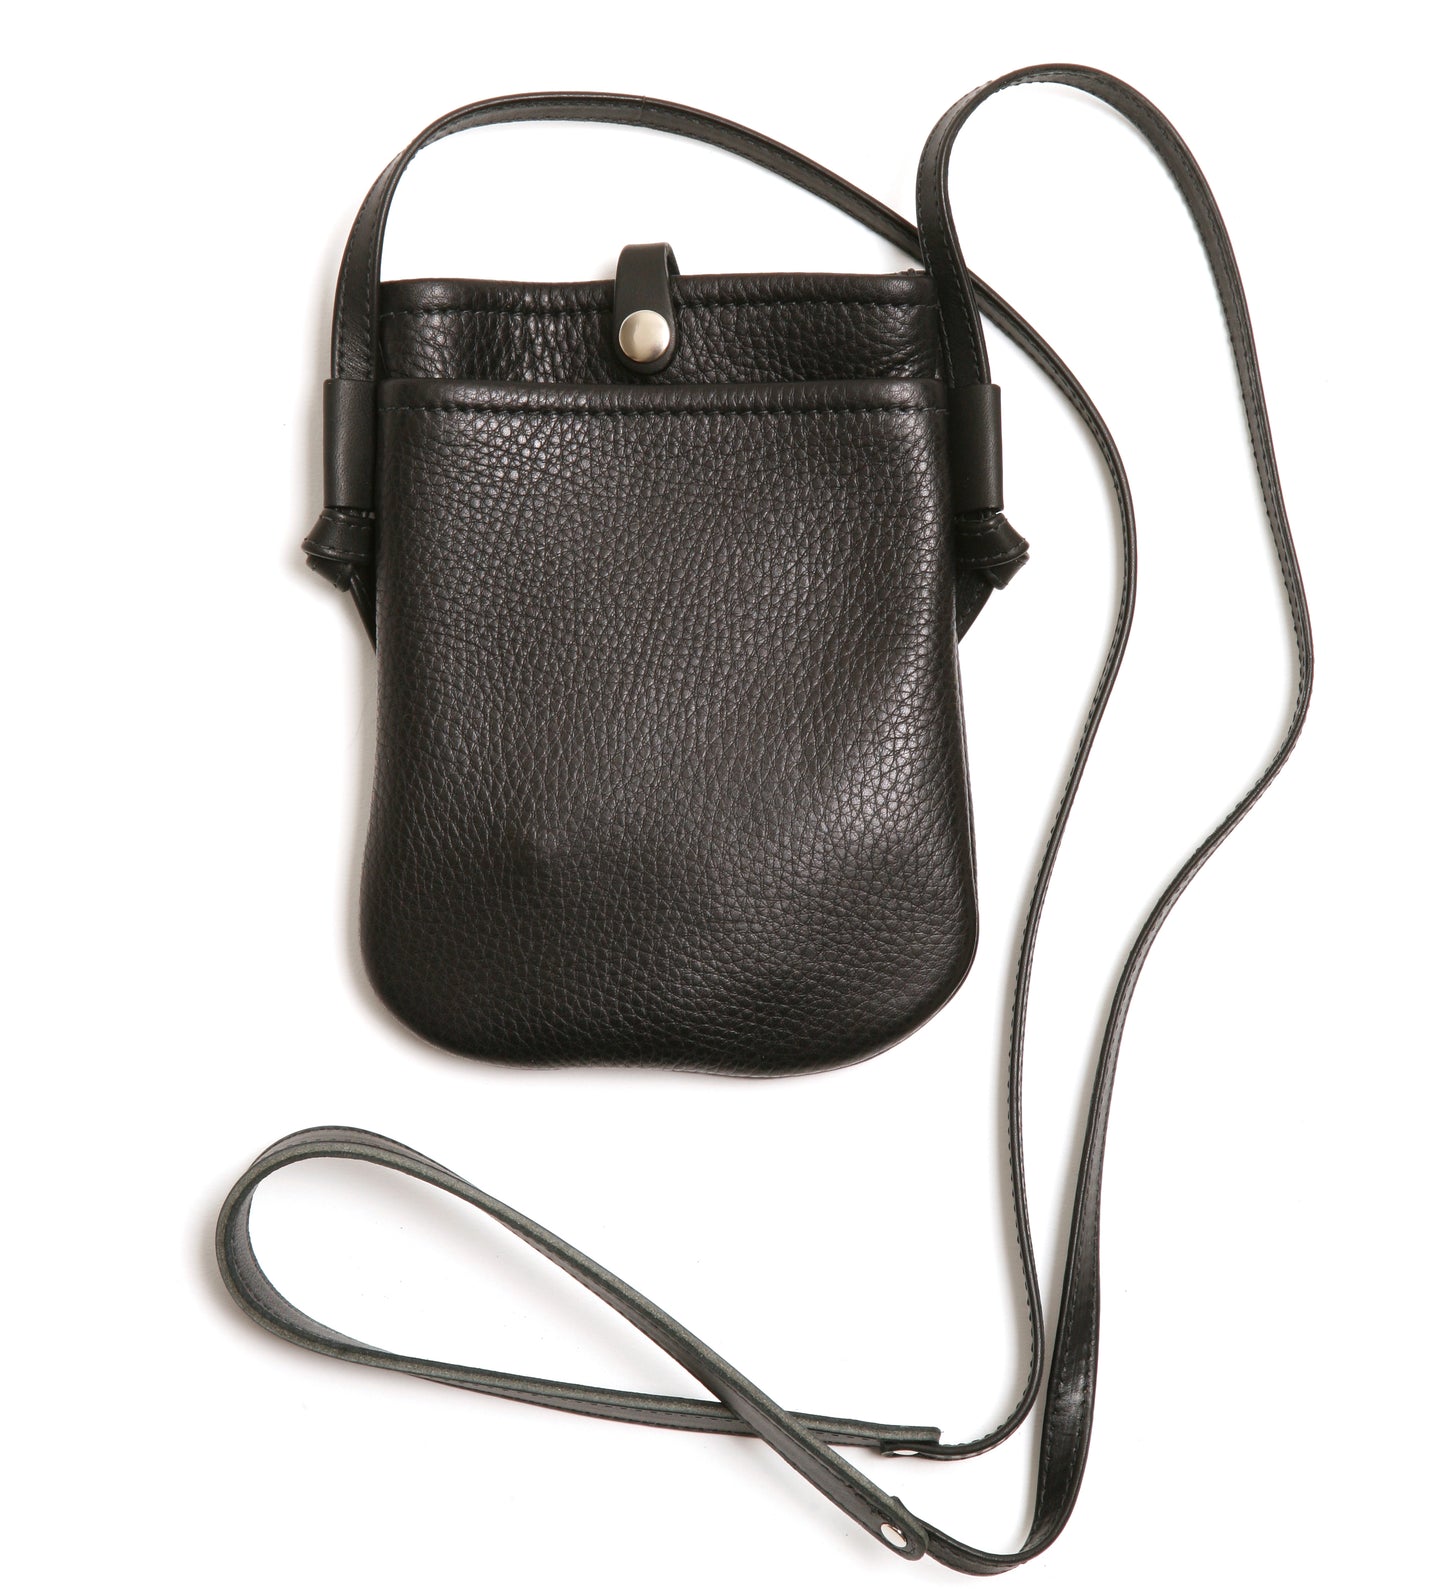 ZOOP mini satchel black – JMB Leather